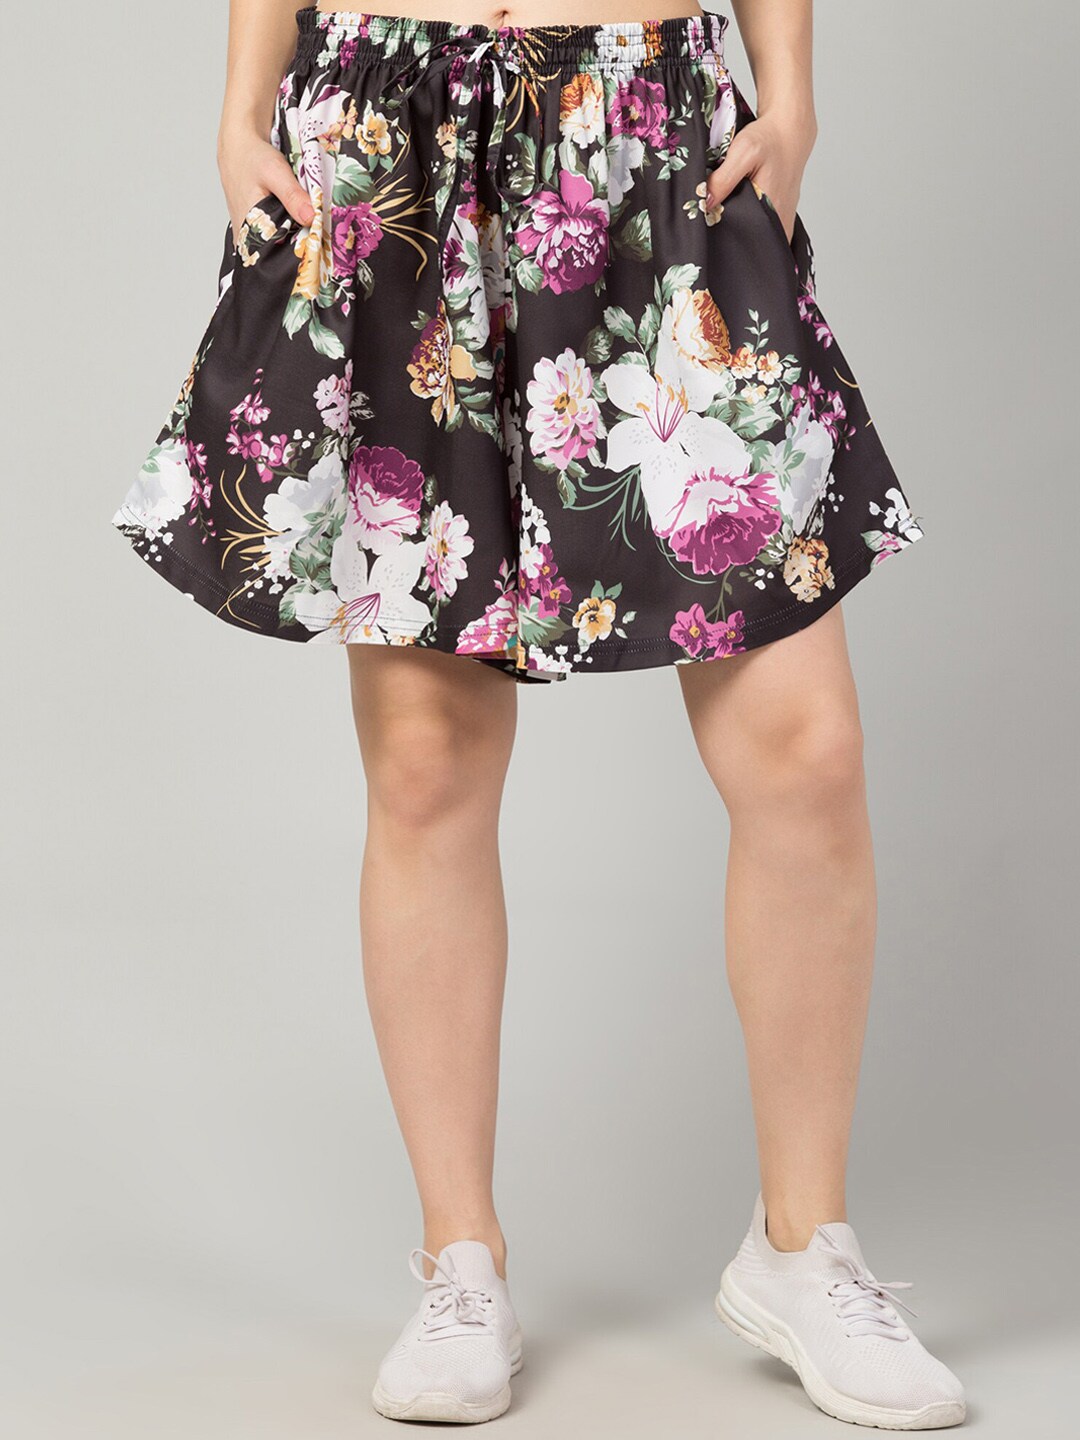 FFLIRTYGO Women Floral Printed Oversized Skirt Shorts Price in India